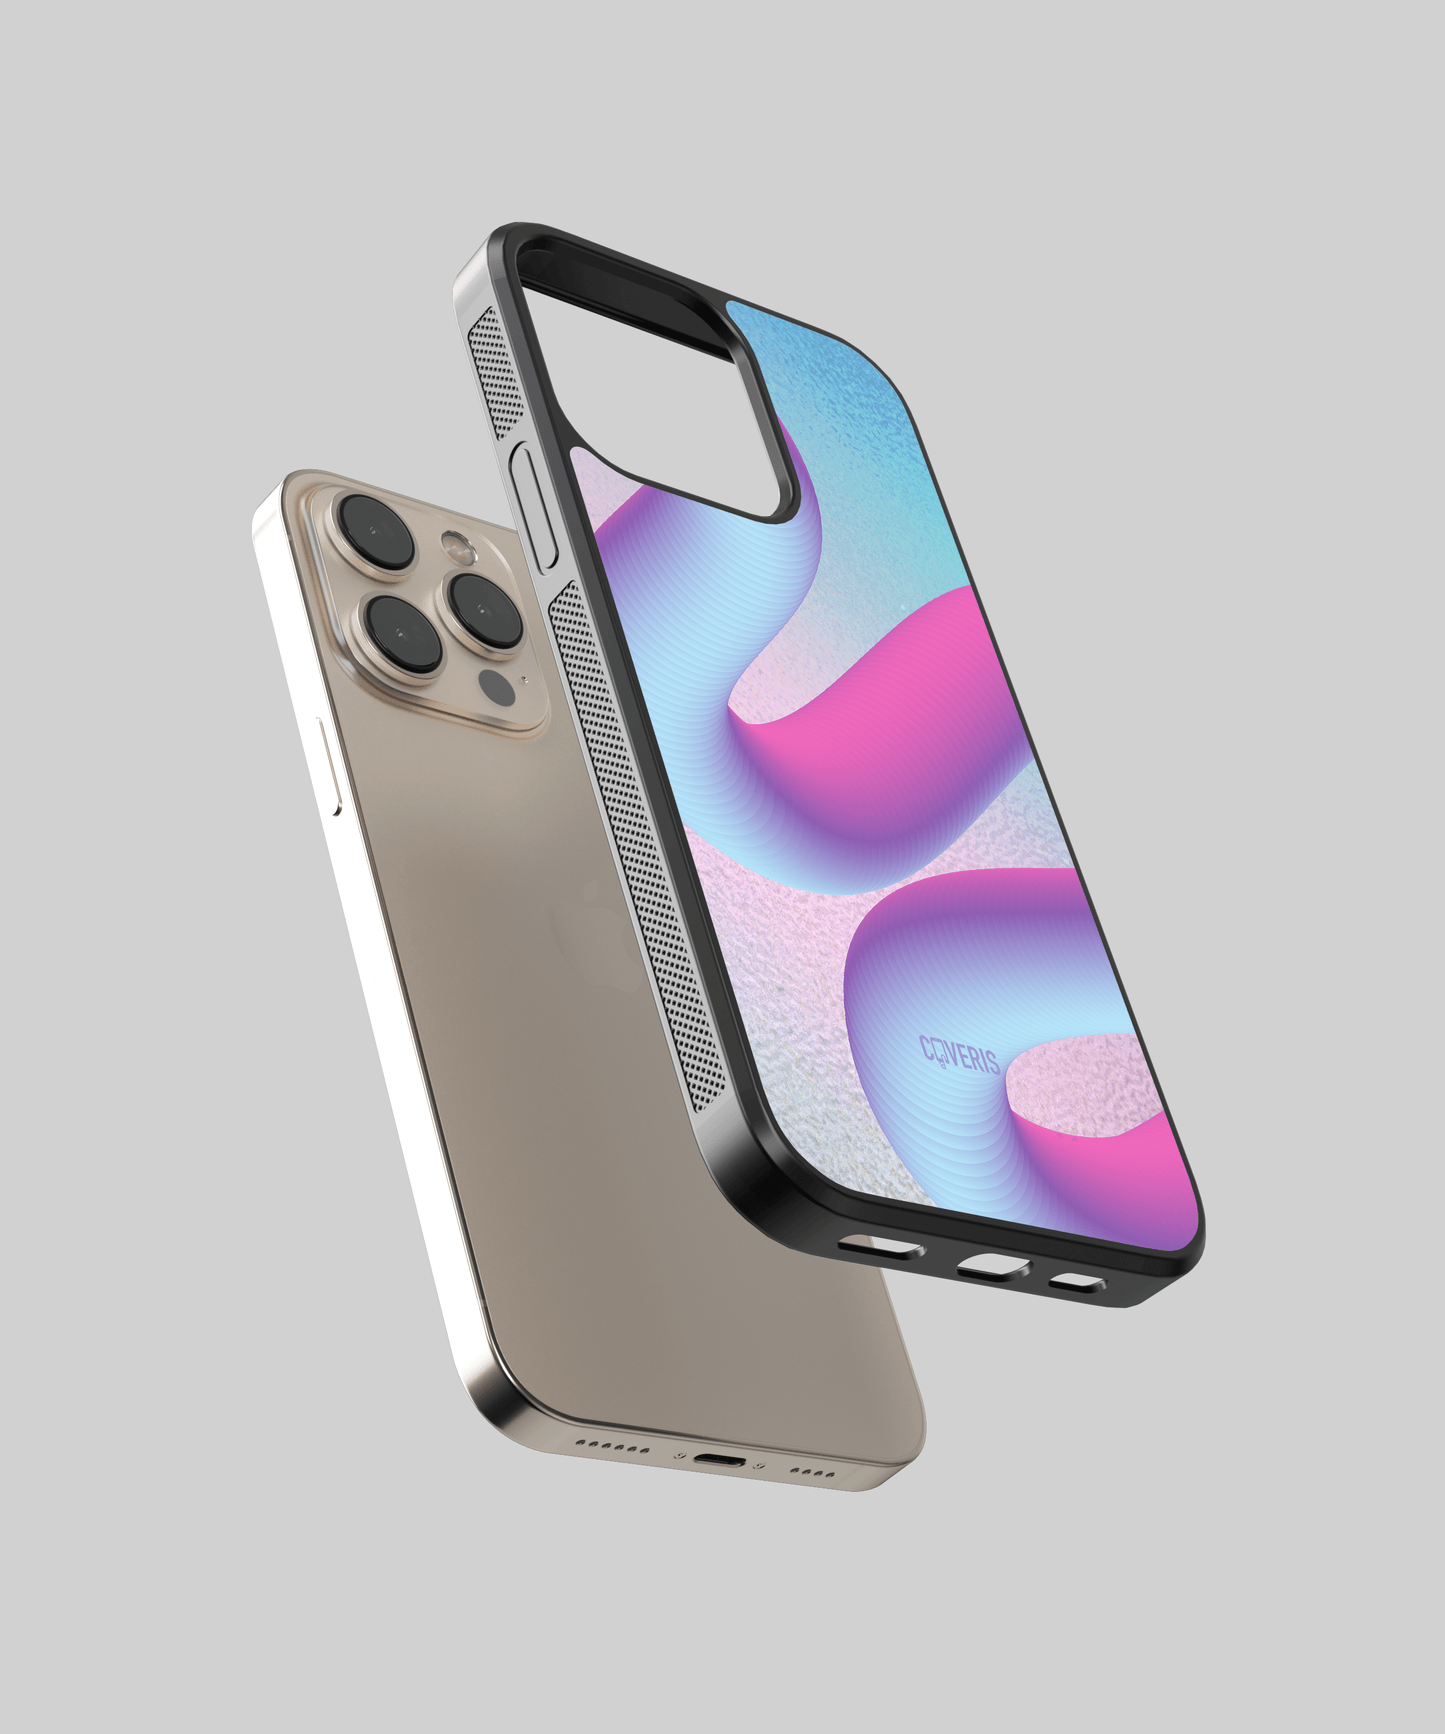 Kaleido - Samsung Galaxy A12 phone case